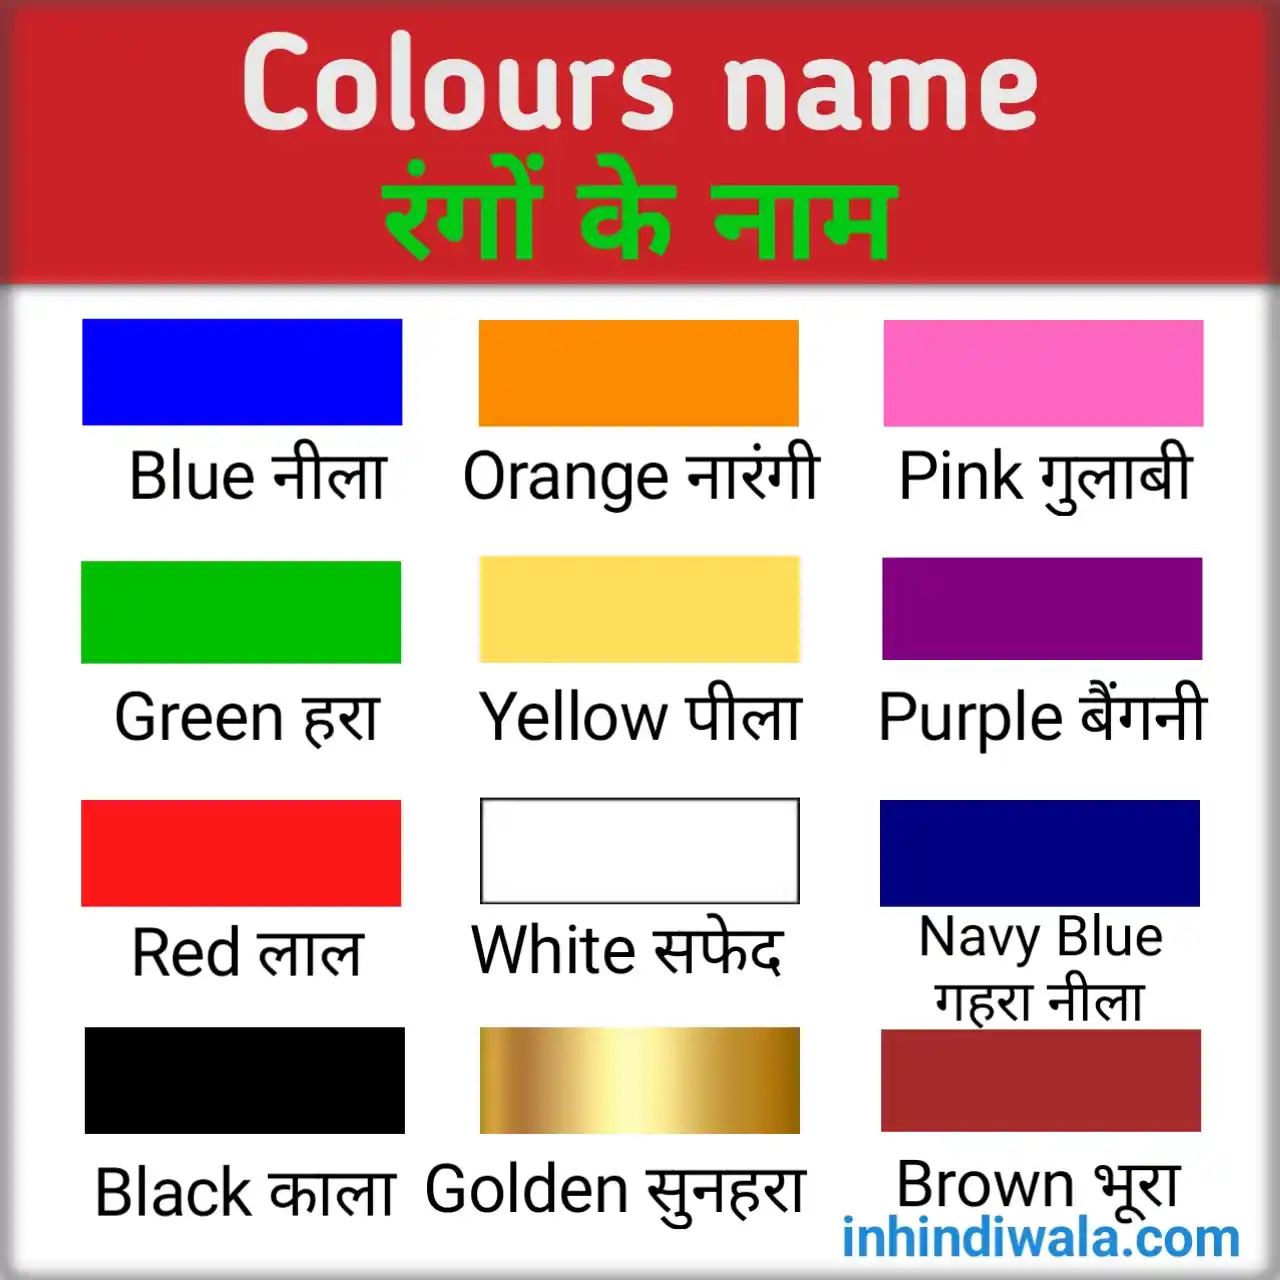 Colours name Rangon ke naam